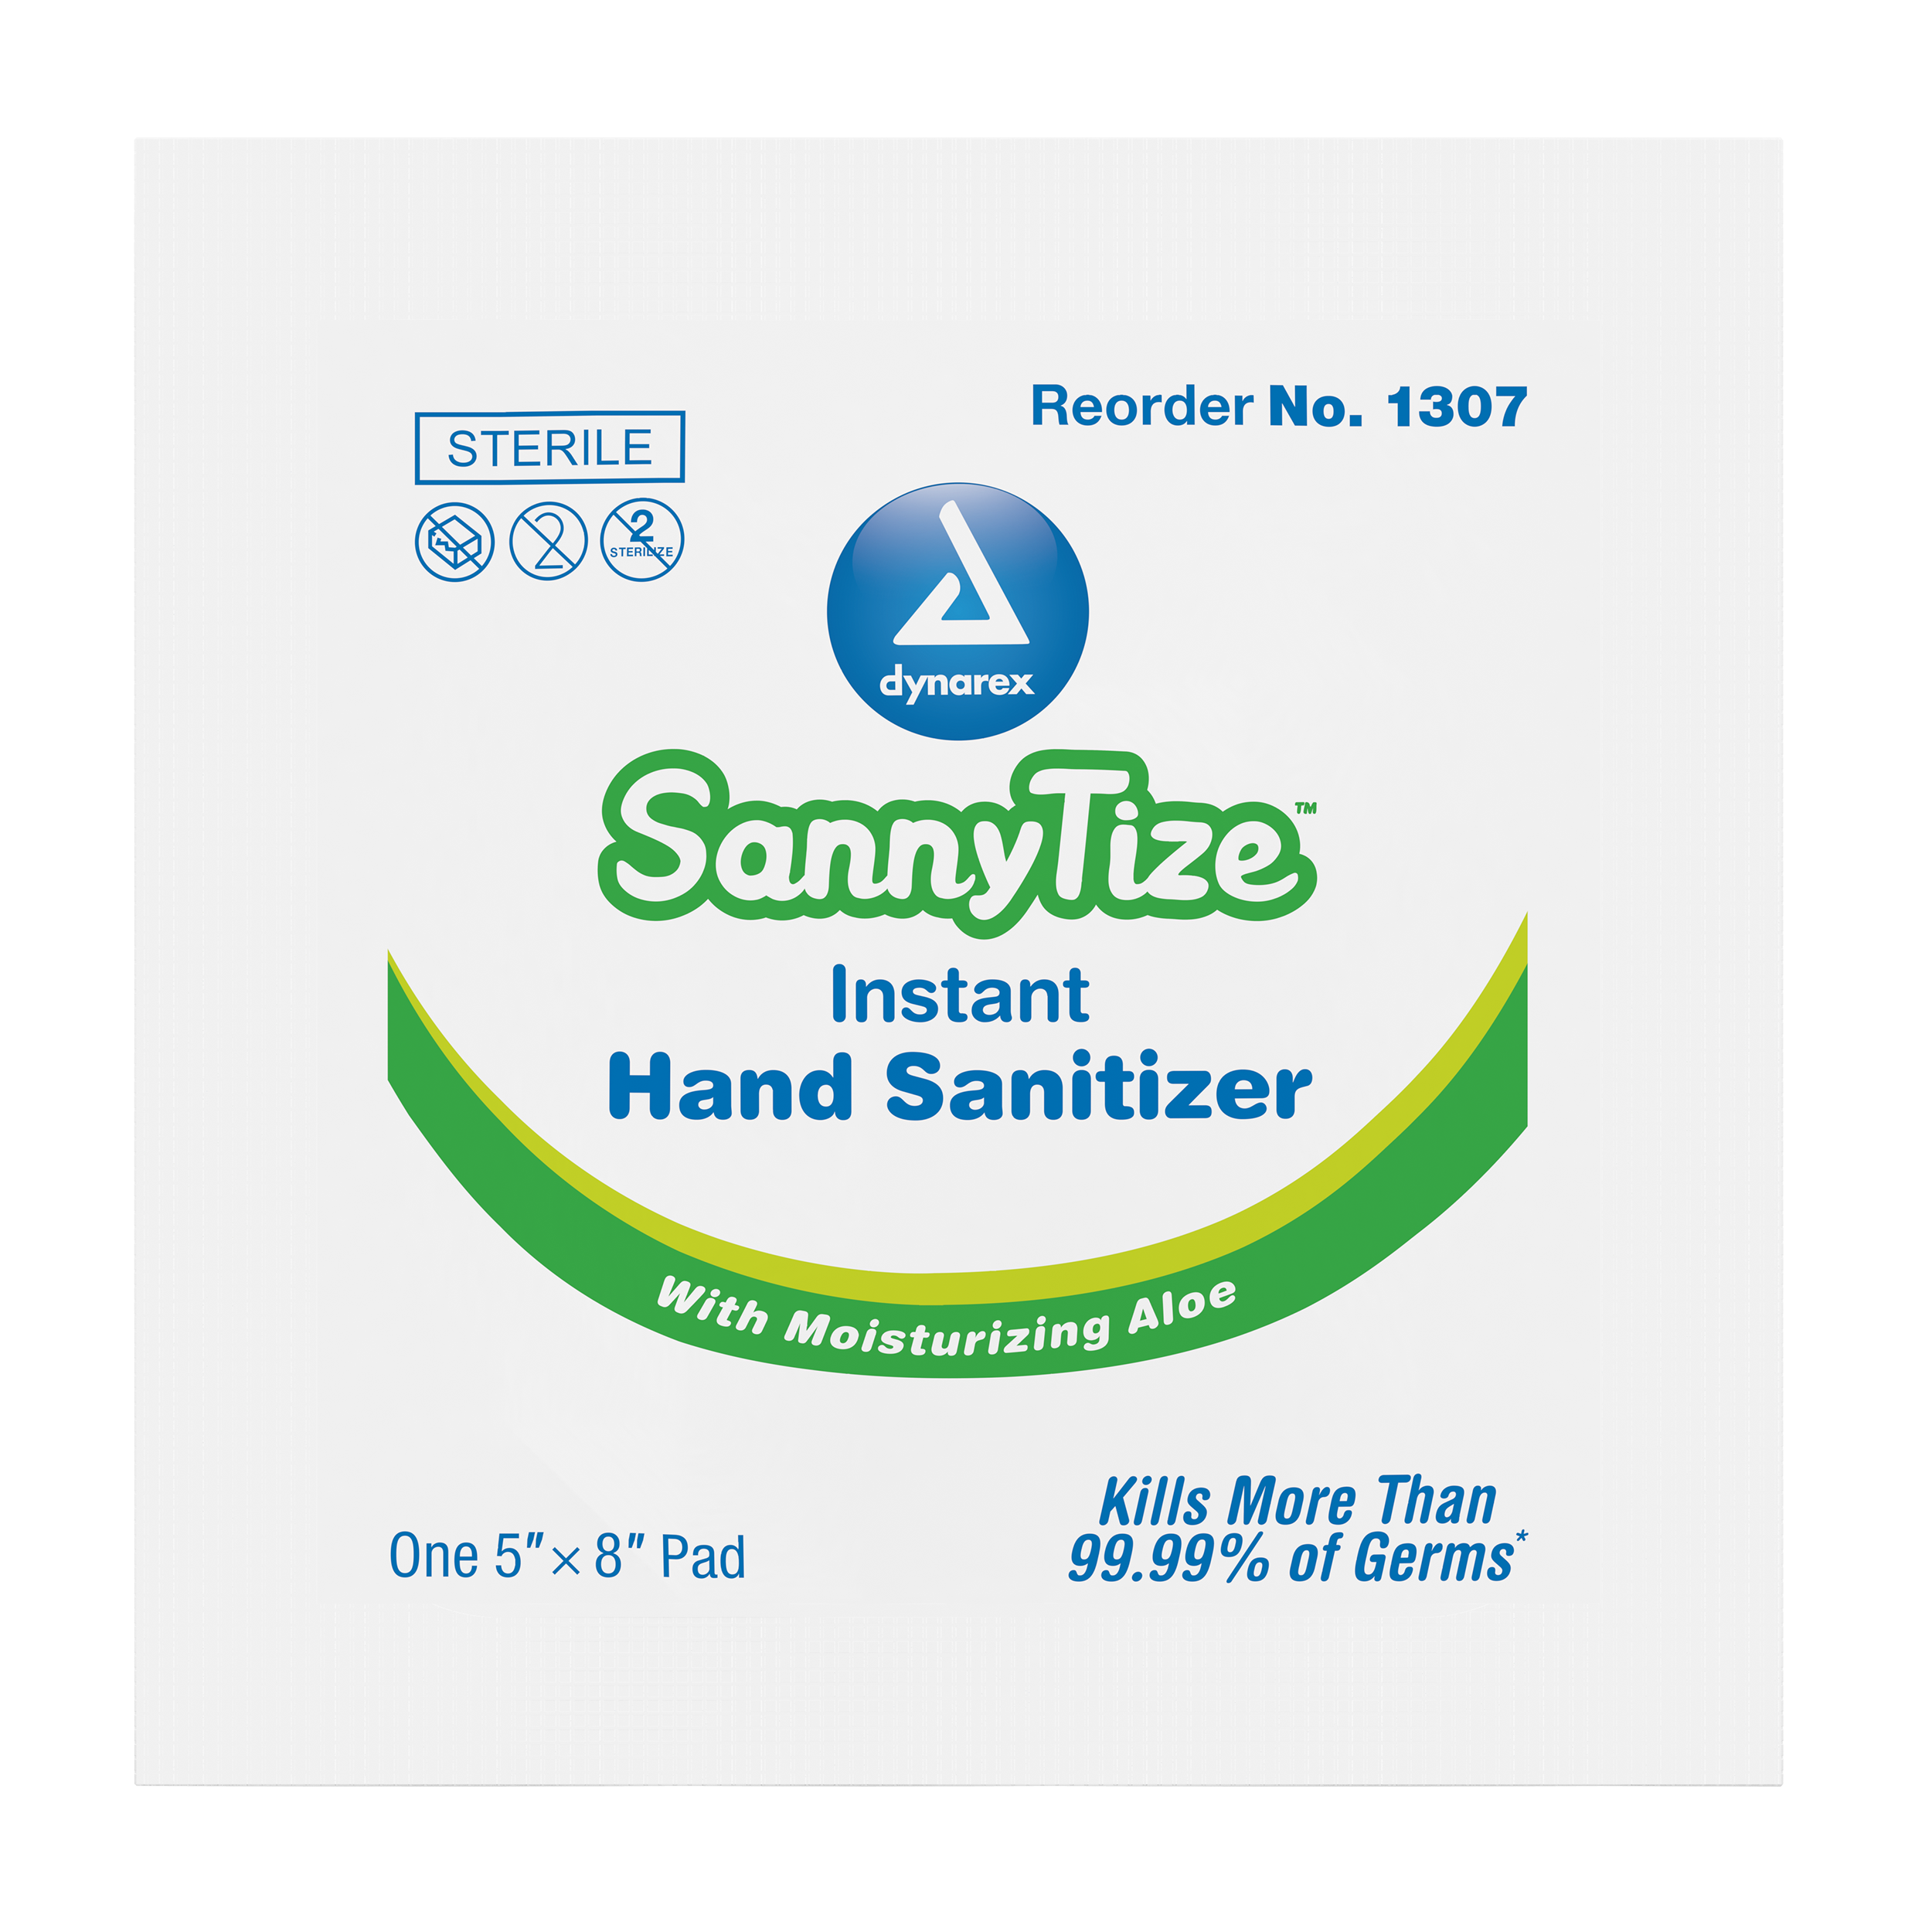 1307 Dynarex单独包装sanytify即时洗手液雨刷是饱和的70%乙醇